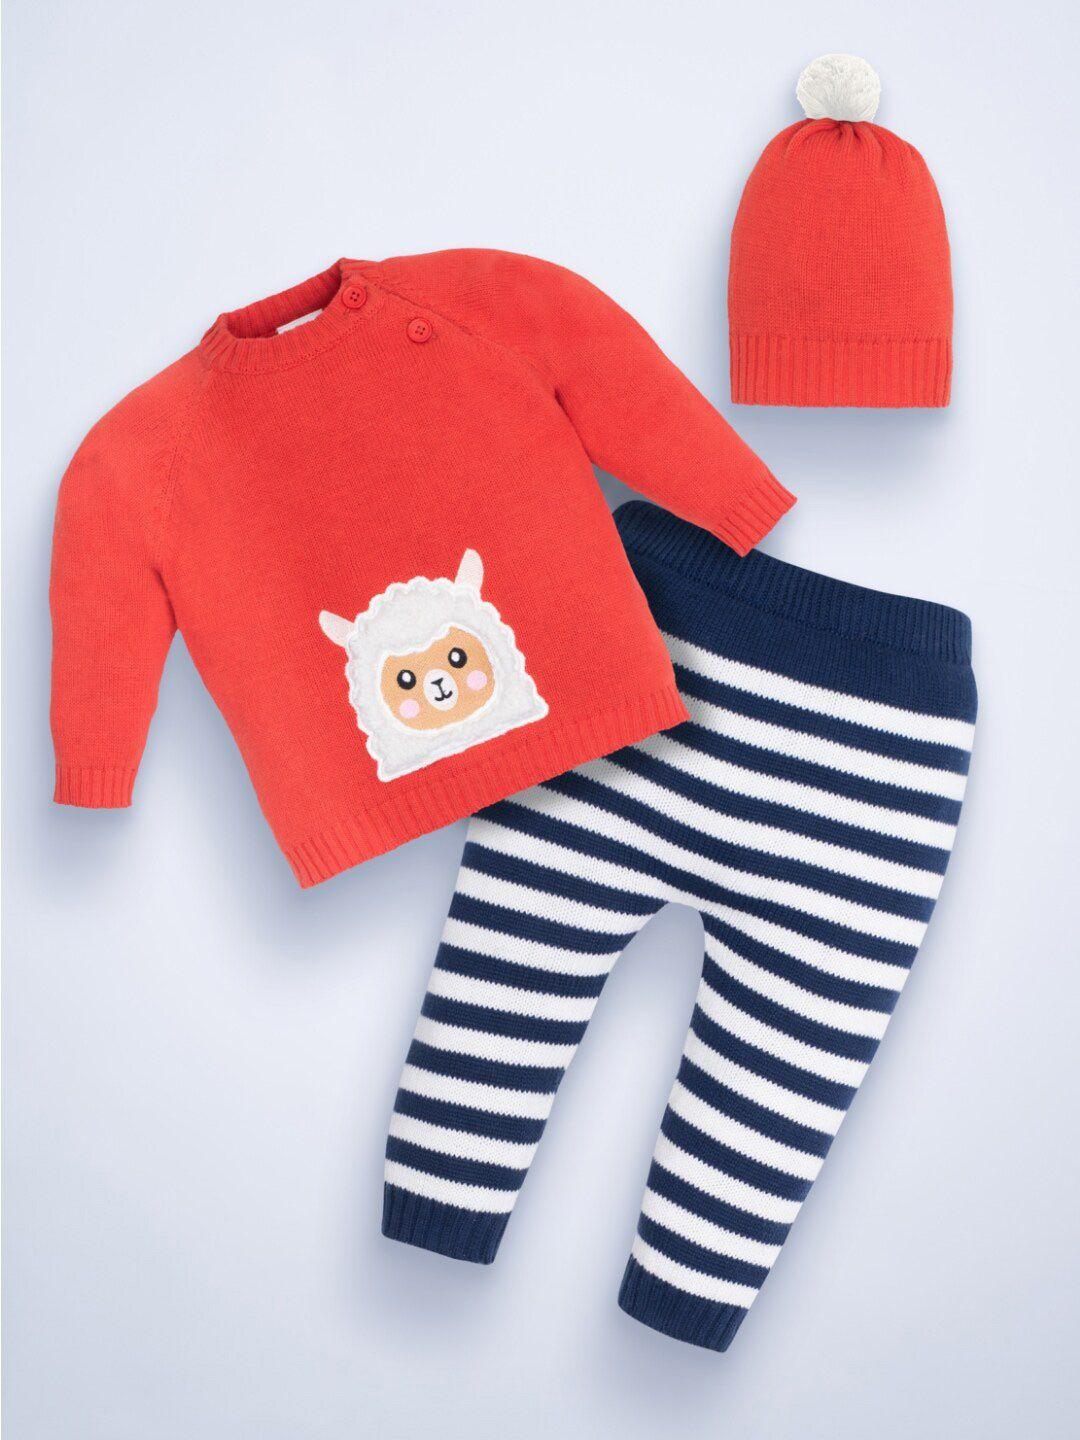 mylo essentials unisex baby sweater & stripe pant set with cap